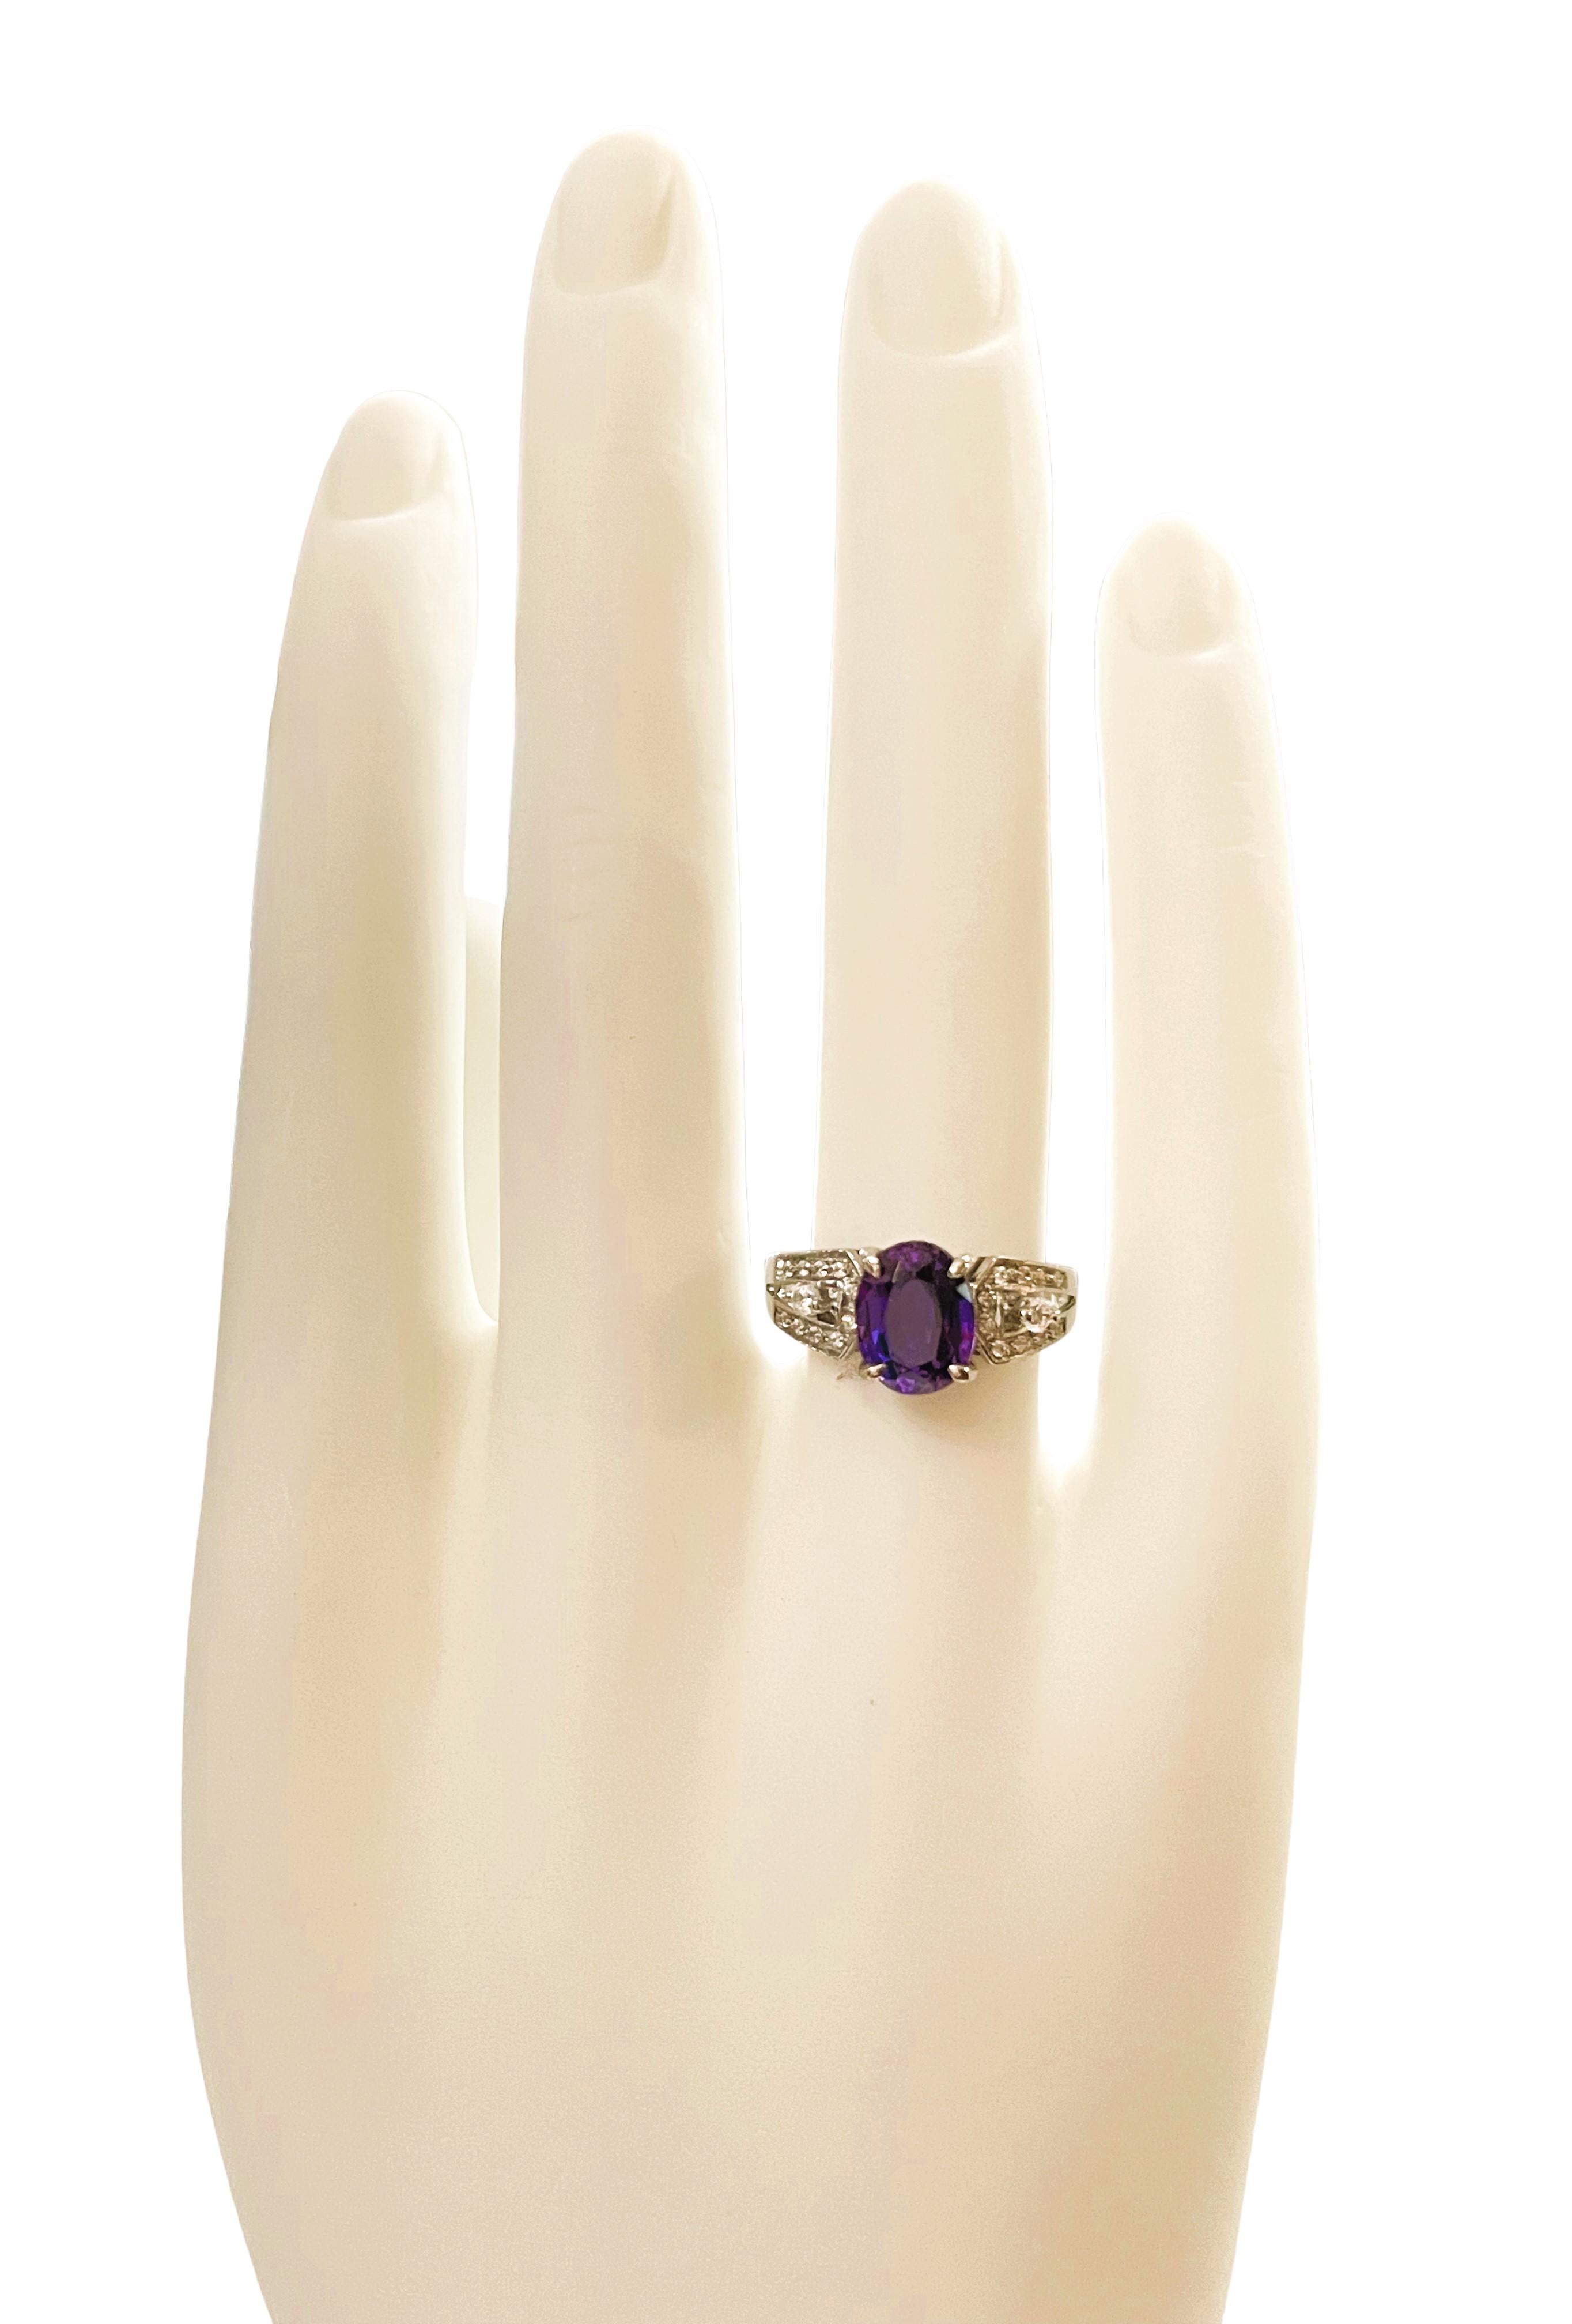 New Brazilian 1.80 Ct Blue Purple Amethyst & Sapphire Sterling Ring For Sale 1